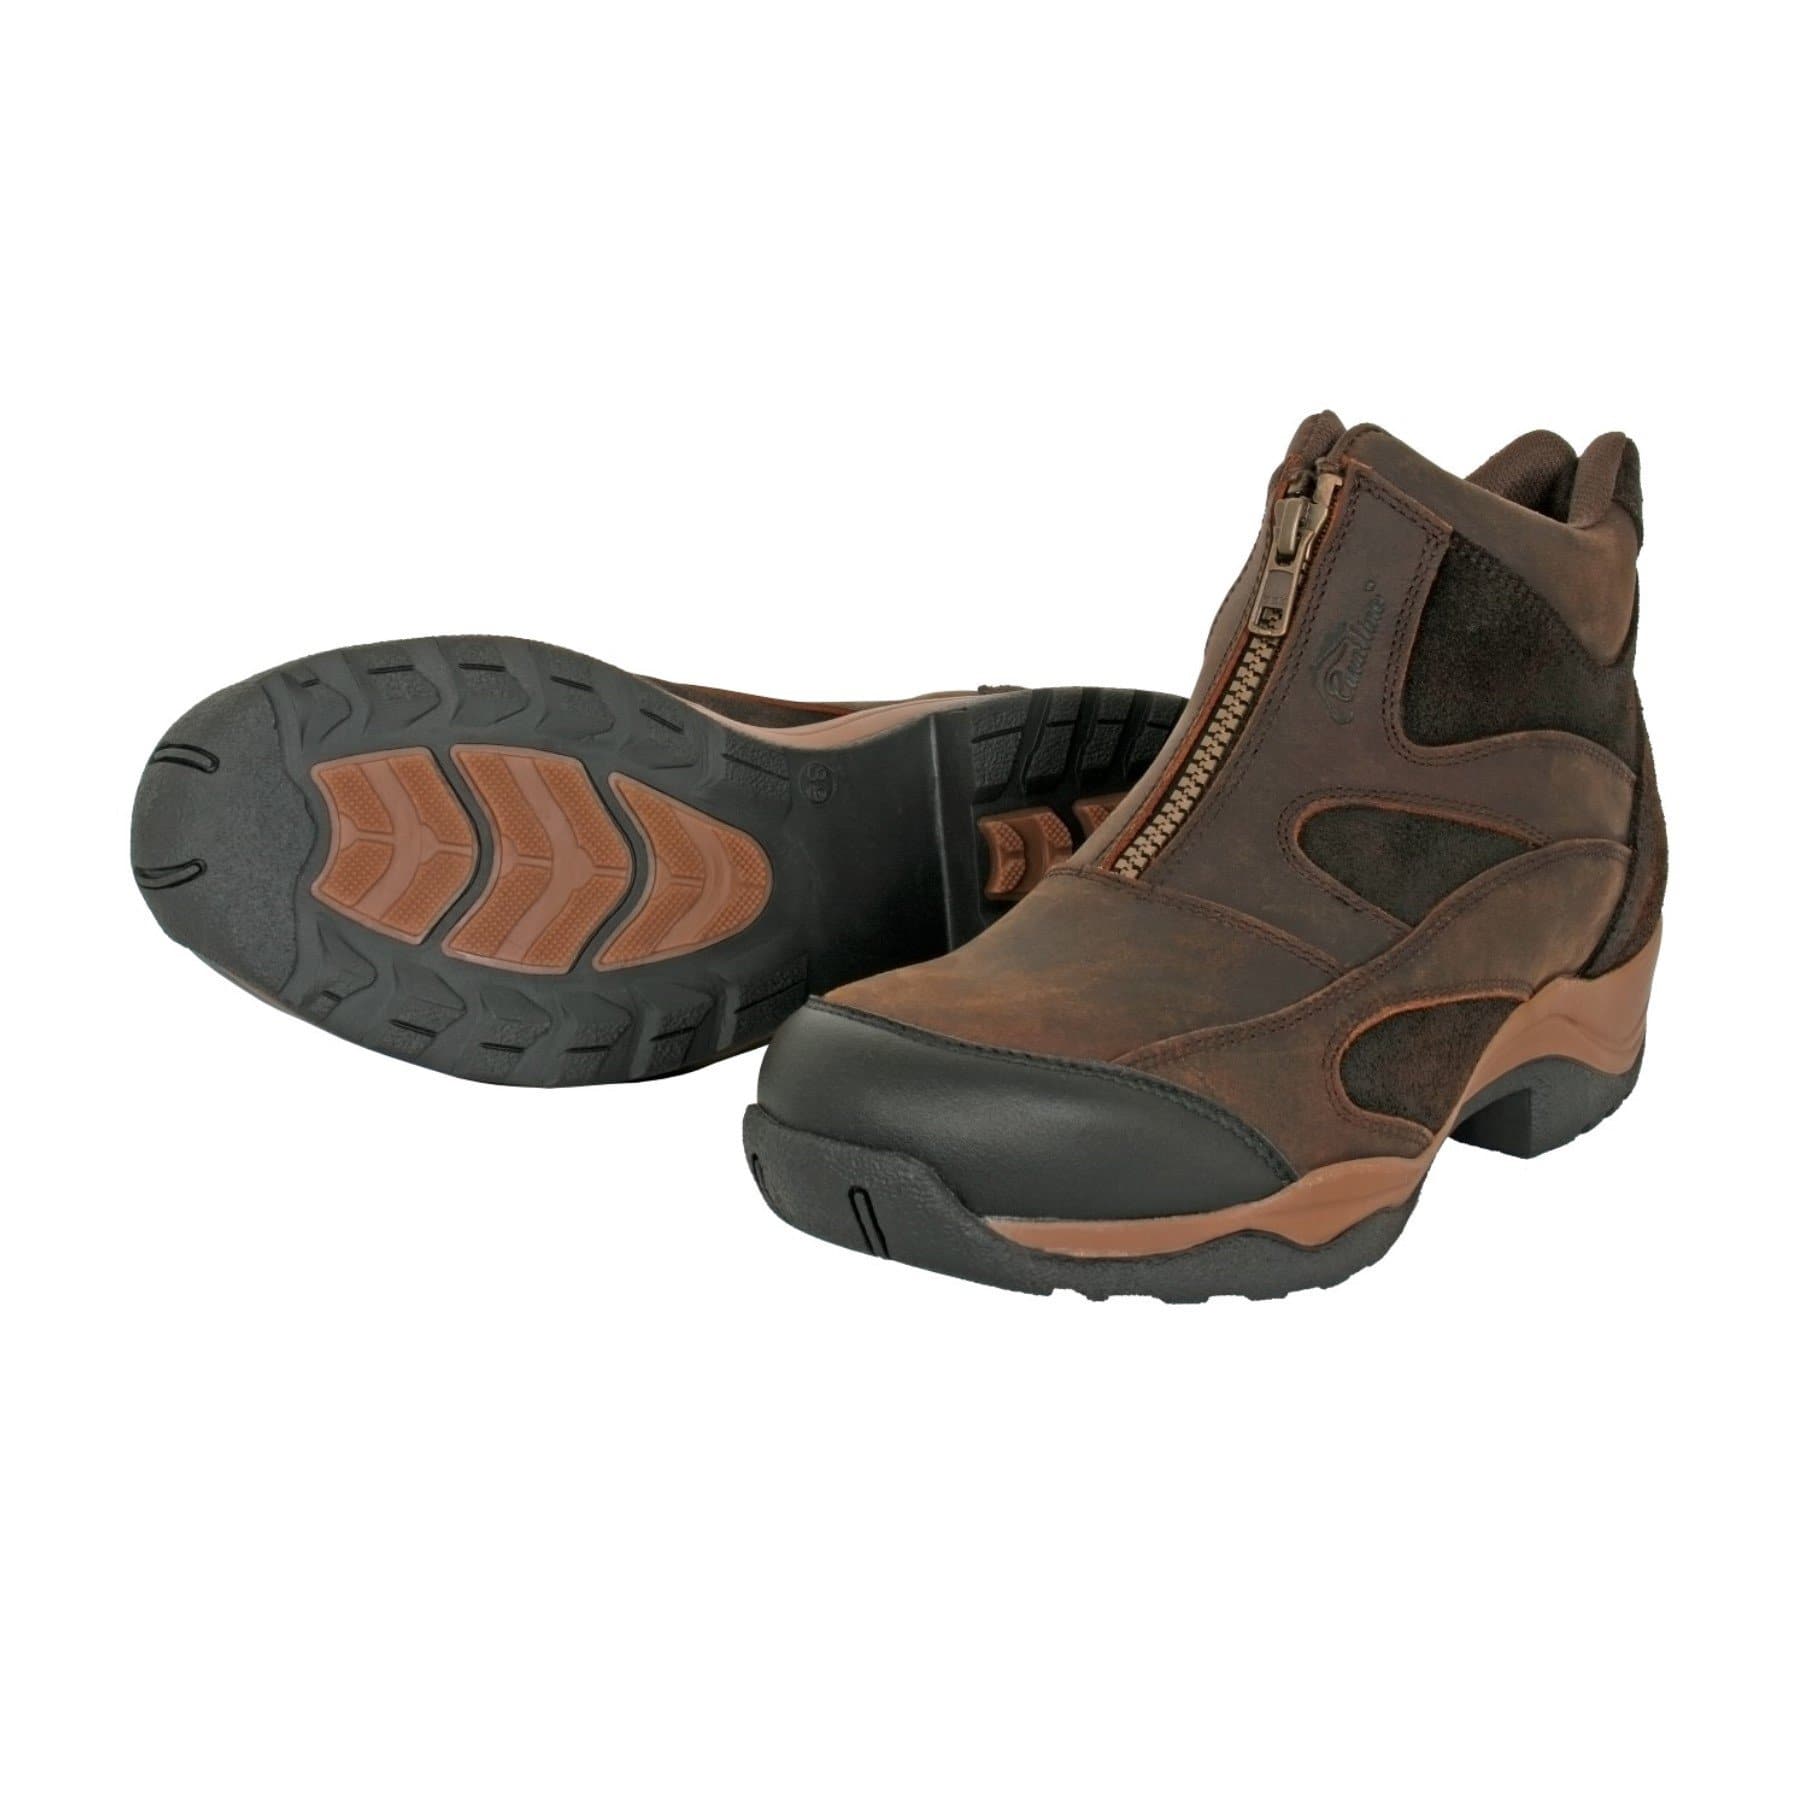 Cavallino Leather Paddock Boots